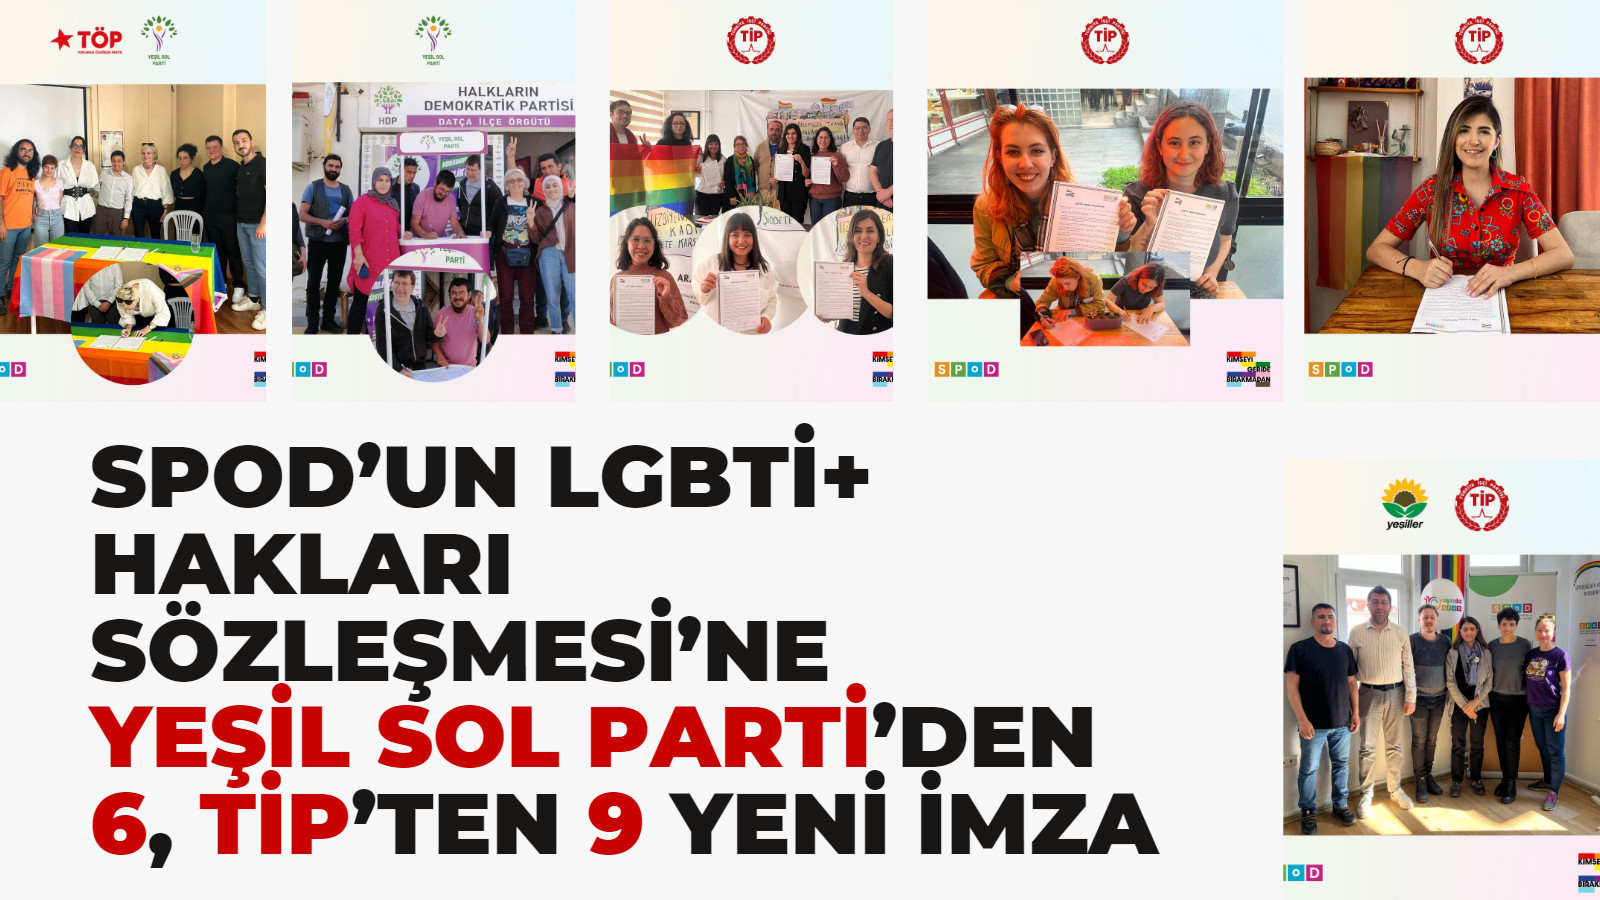 LGBTİ+ Hakları Sözleşmesi’ni imzalayan milletvekili adayı sayısı 29 oldu | Kaos GL - LGBTİ+ Haber Portalı Haber